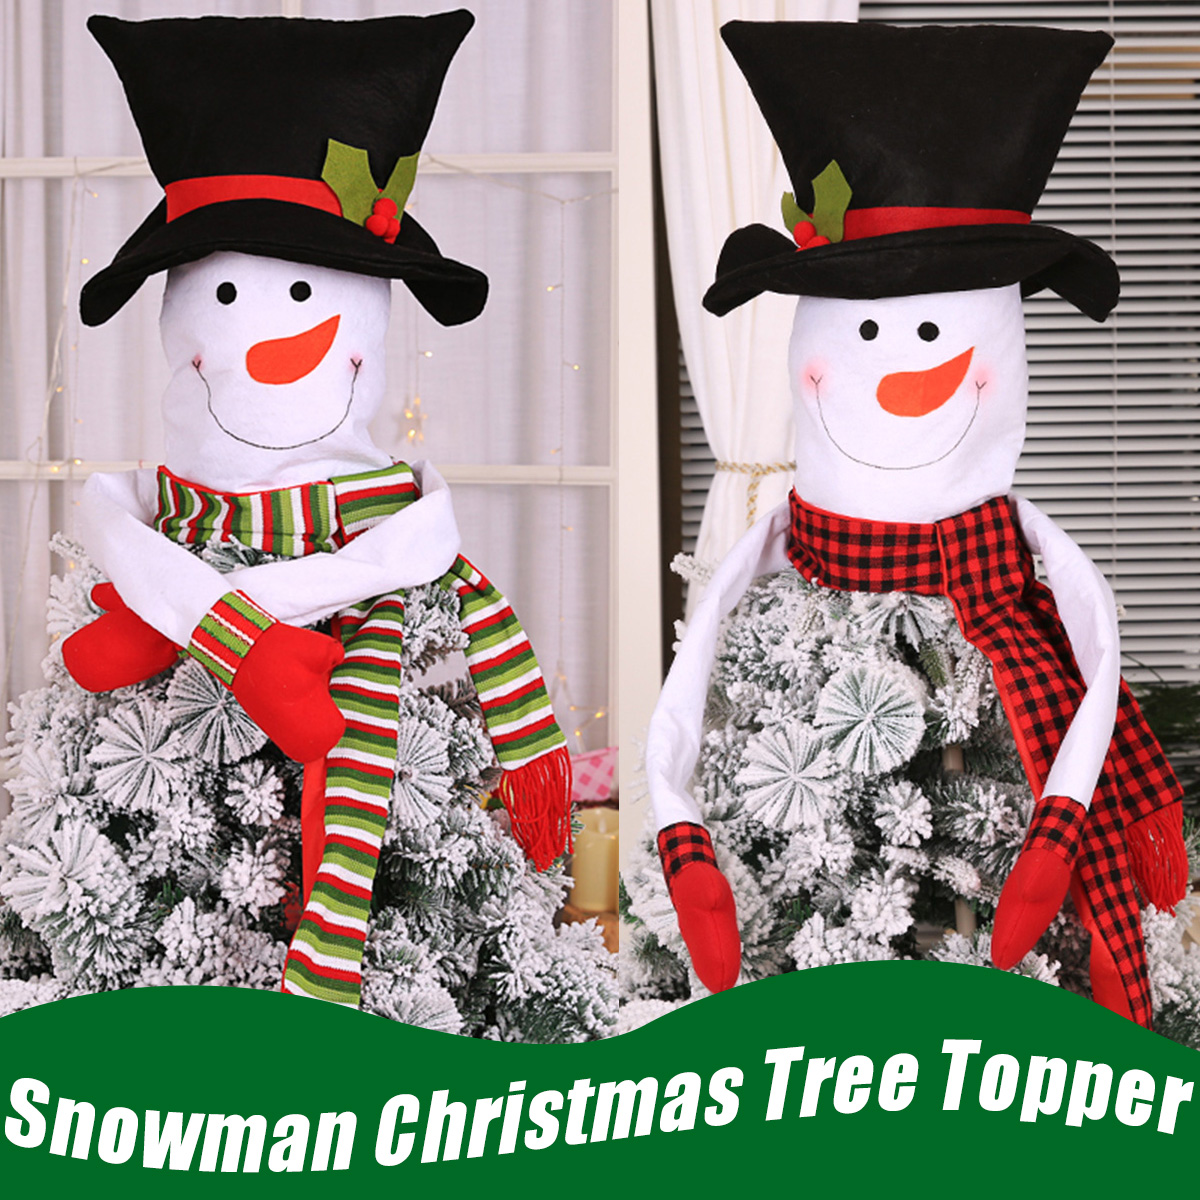 Snowman-Hug-Tree-Non-woven-Fabric-Christmas-Tree-Topper-Snowman-Type-Decorations-1353031-1